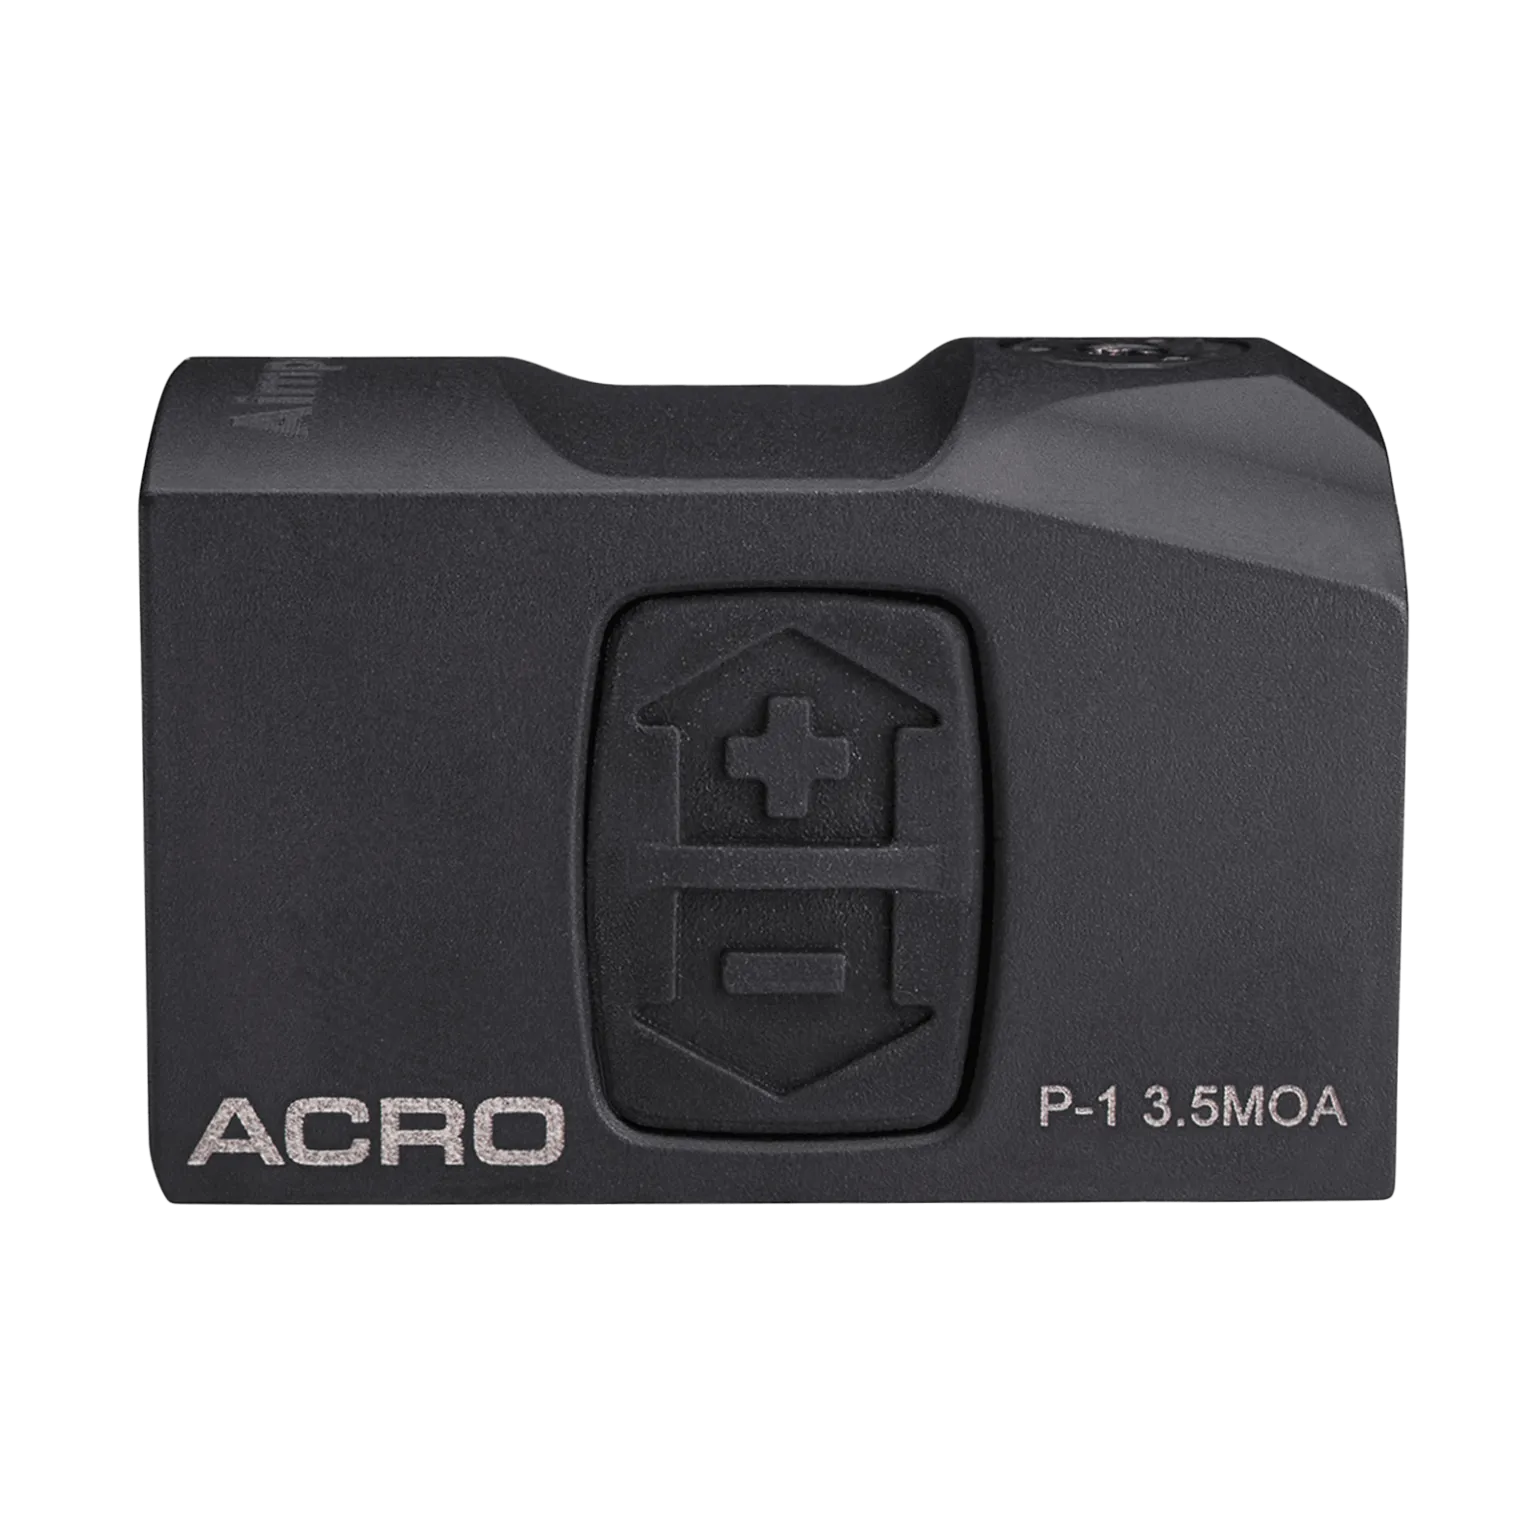 Acro P-1™ 3.5 MOA - Mirino a punto rosso con interfaccia Acro™ integrata - 2